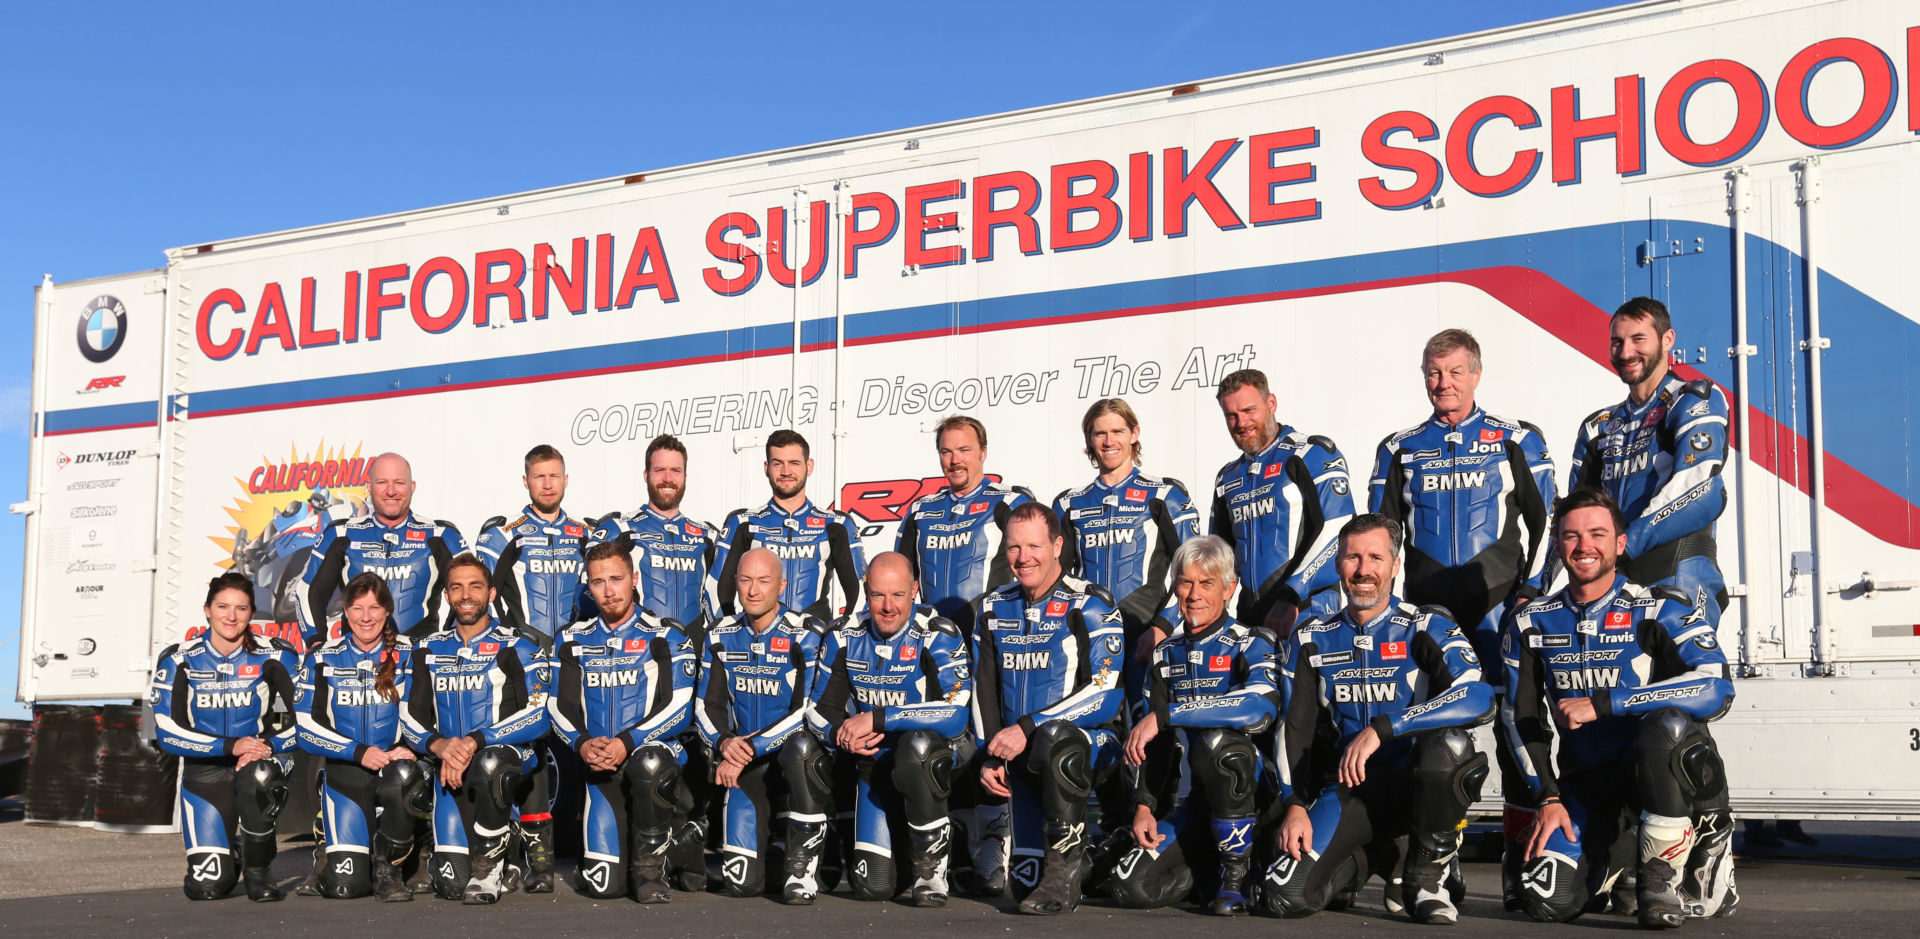 The California Superbike School team of coach instructors. Photo courtesy of California Superbike School.